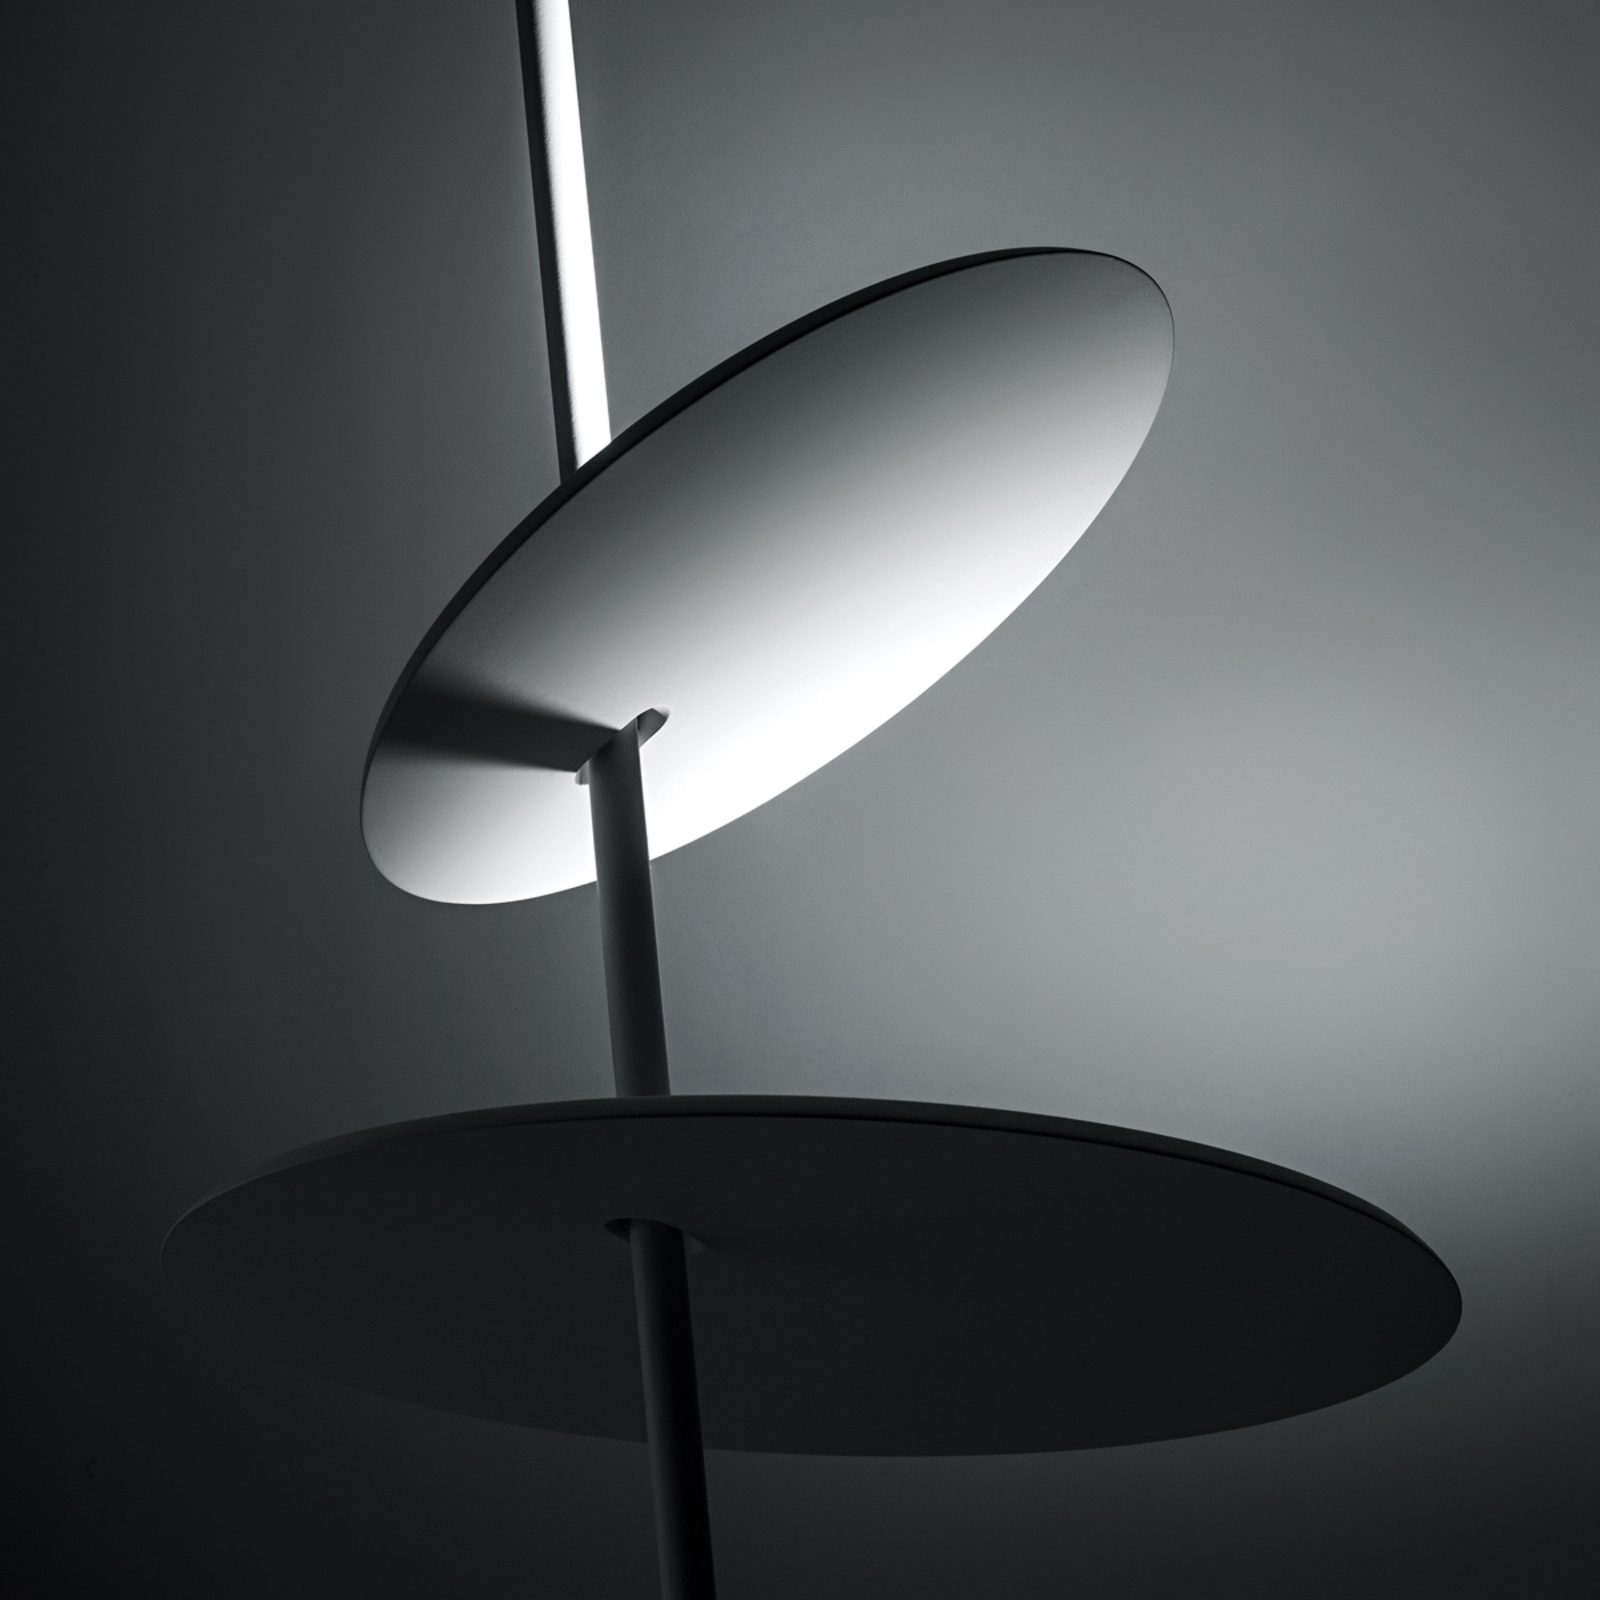 ICONE Lua - LED-Designer-Deckenlampe in Weiß